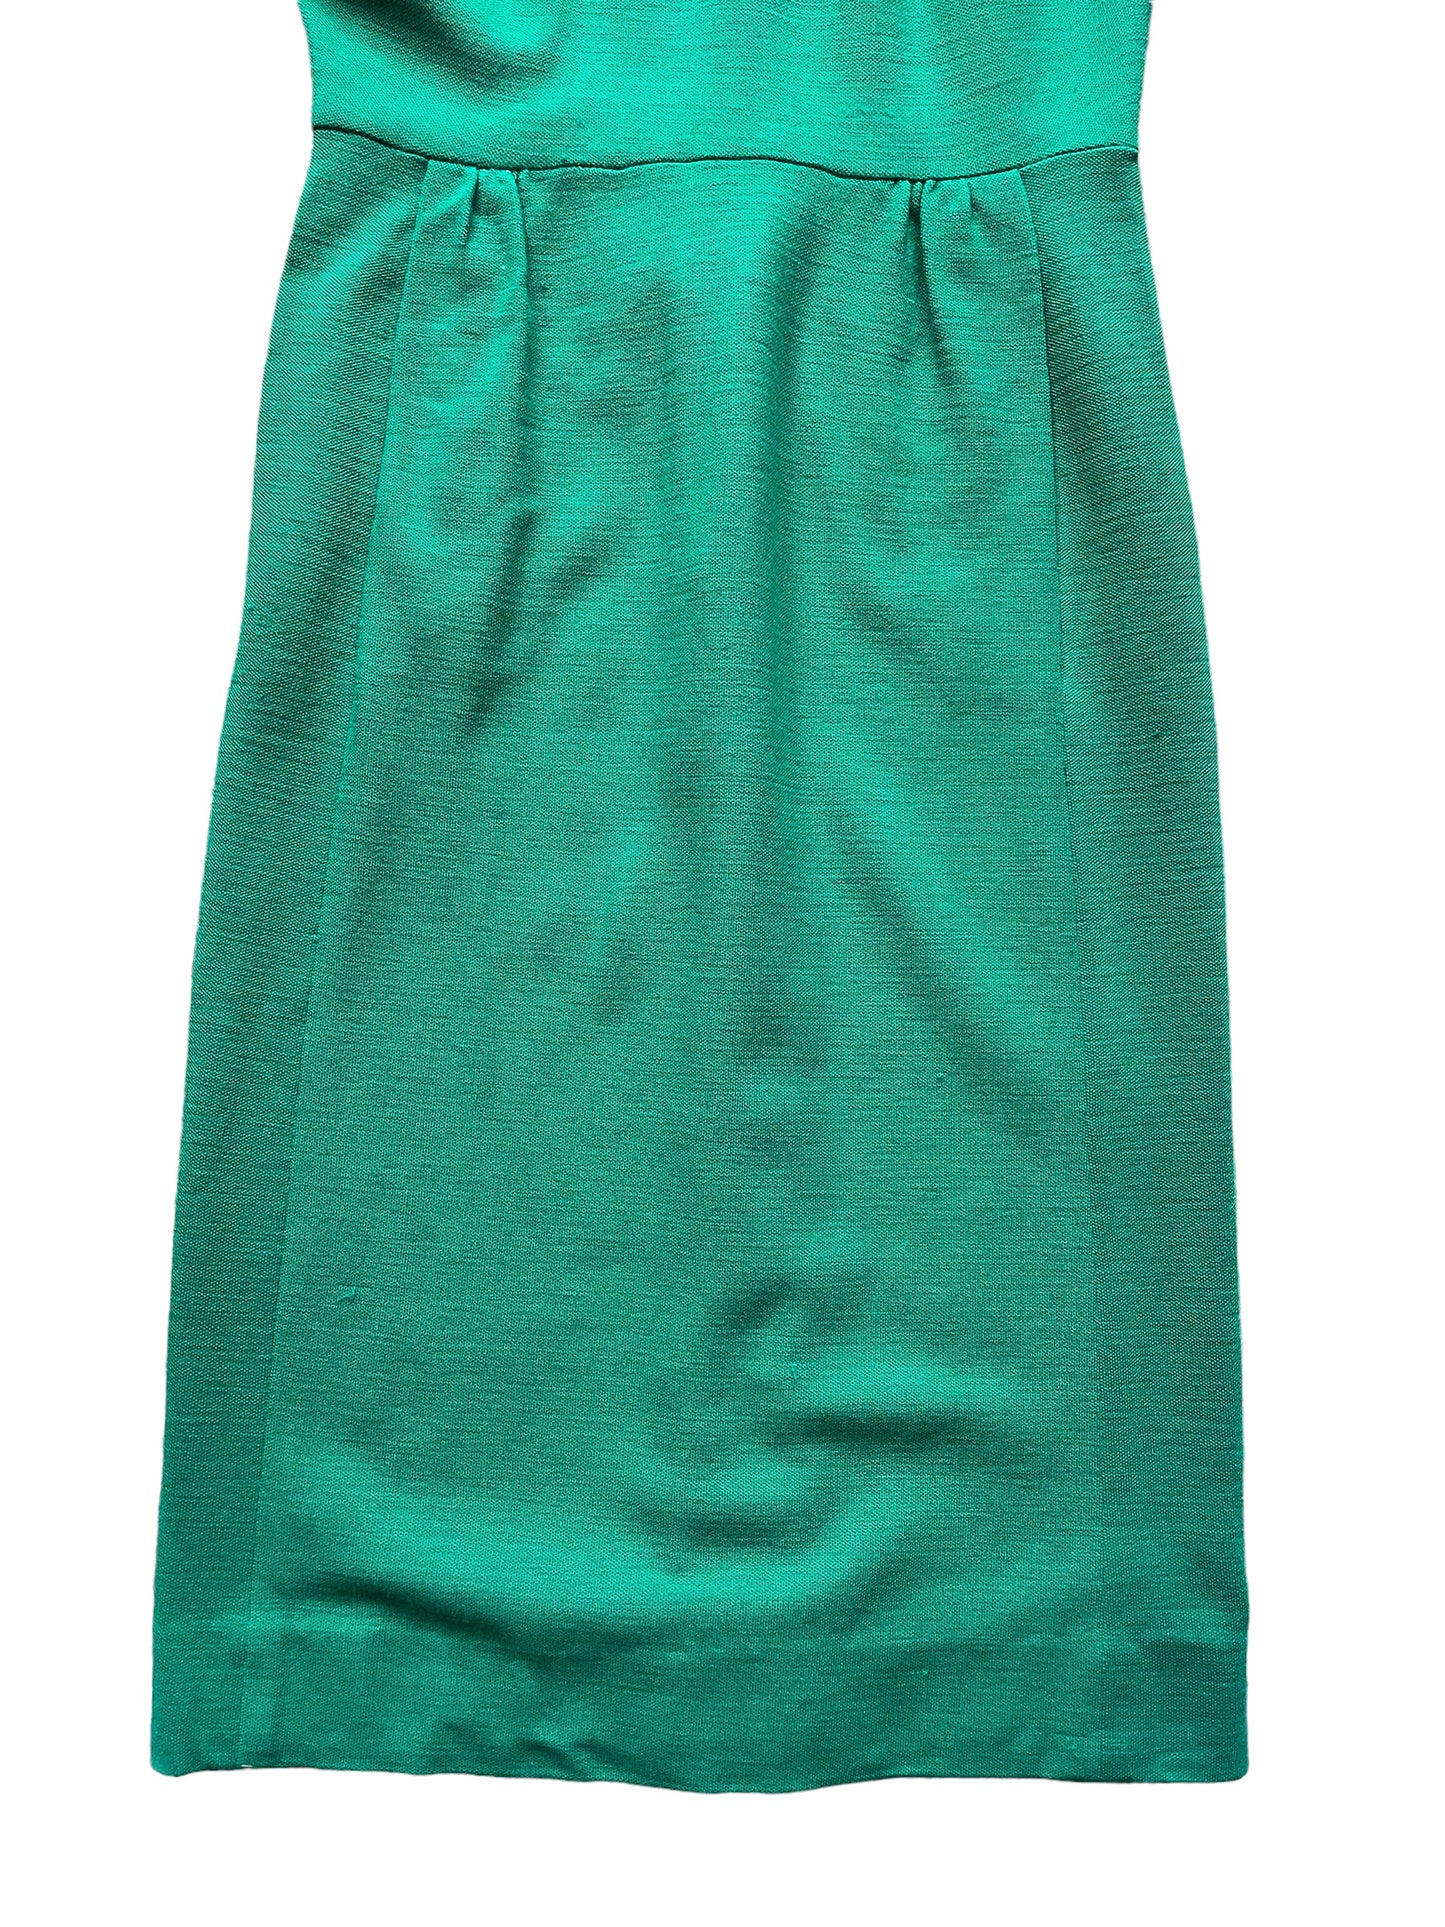 Front skirt view of Vintage 1950s Green Wool Wiggle Dress SZ M |  Barn Owl Vintage Dresses| Seattle Vintage Ladies Clothing